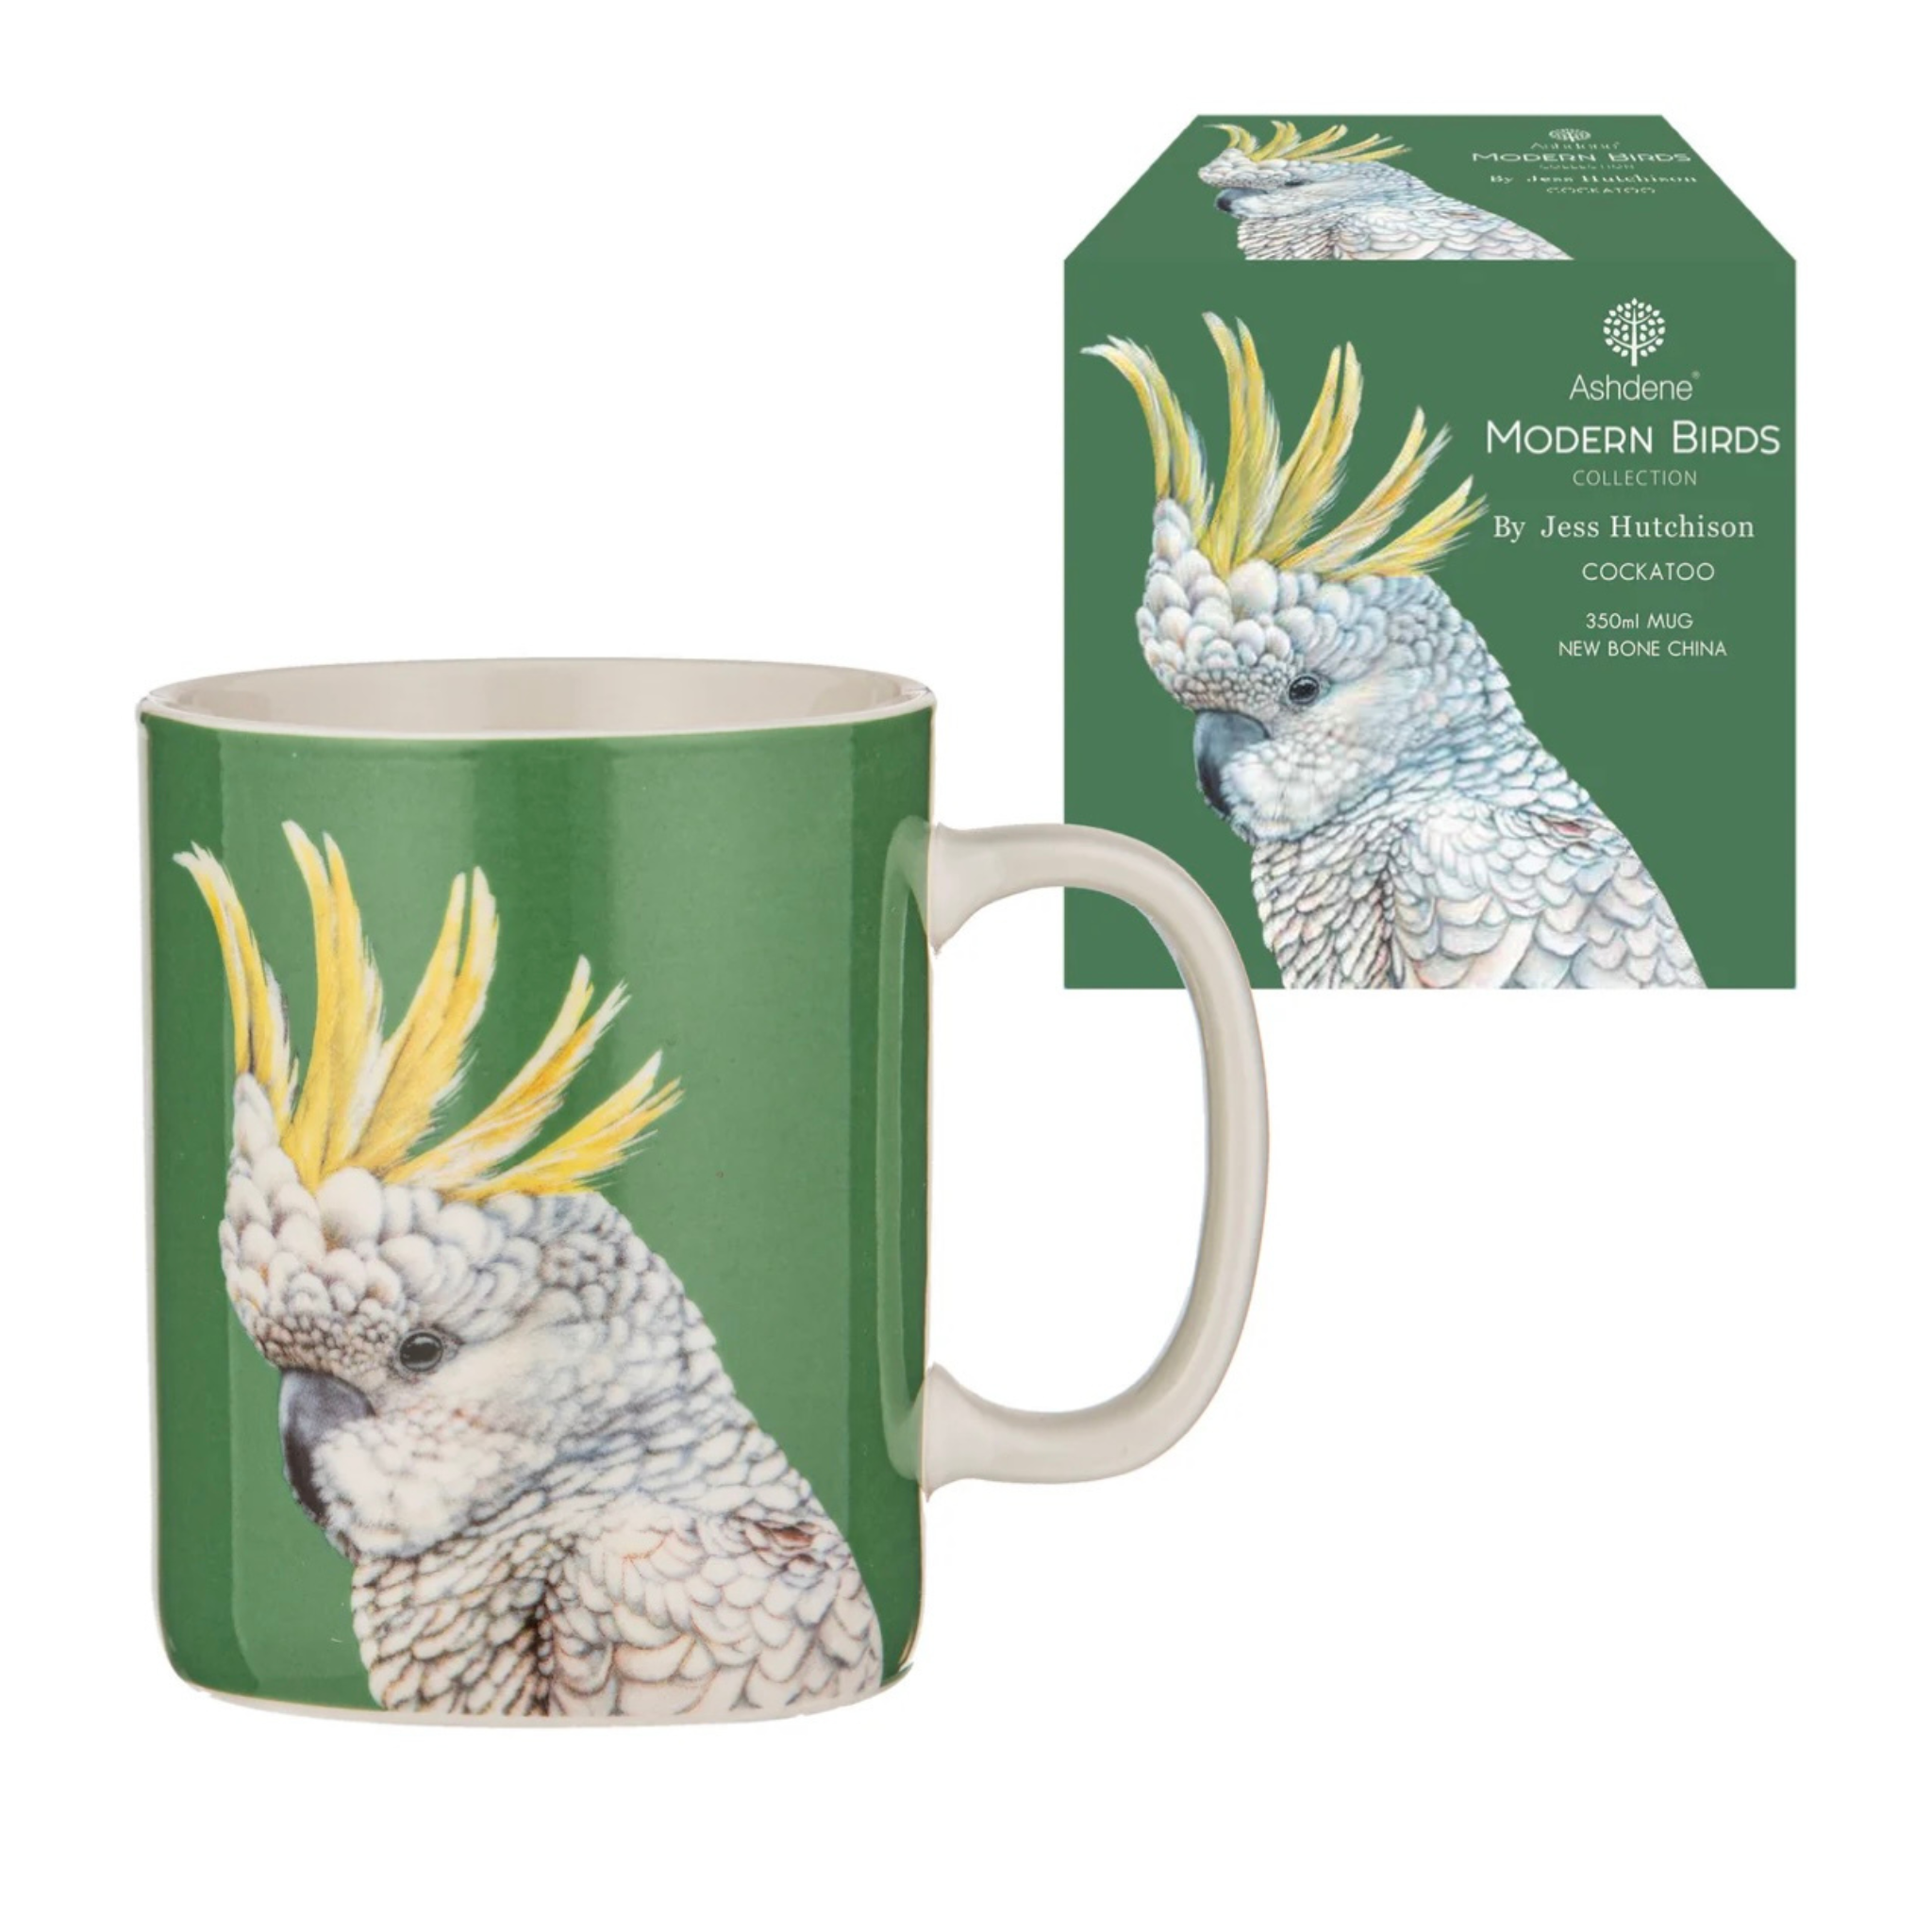 Modern Birds Cockatoo Mug